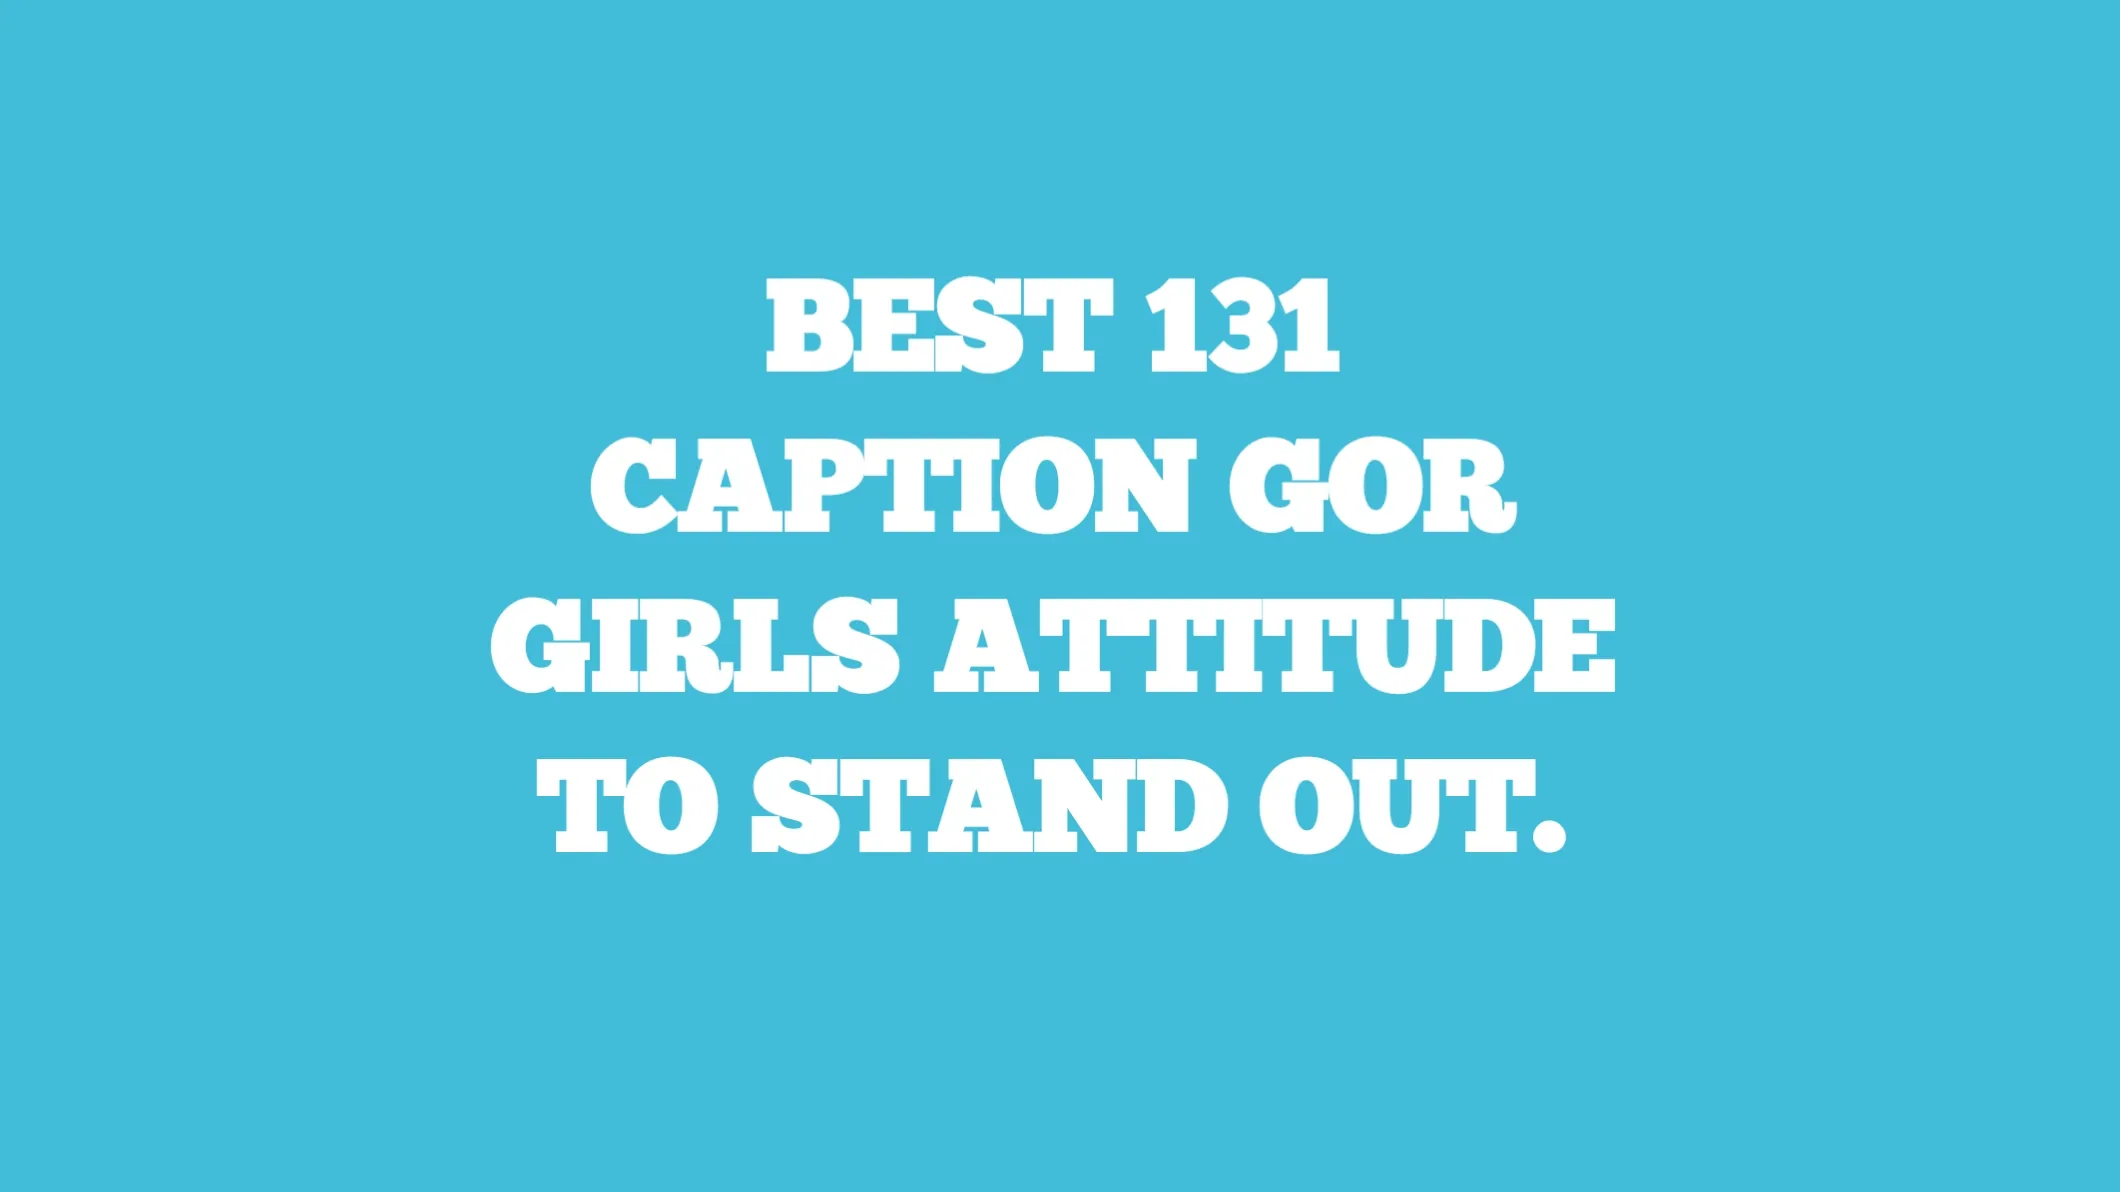 caption for girls attitude